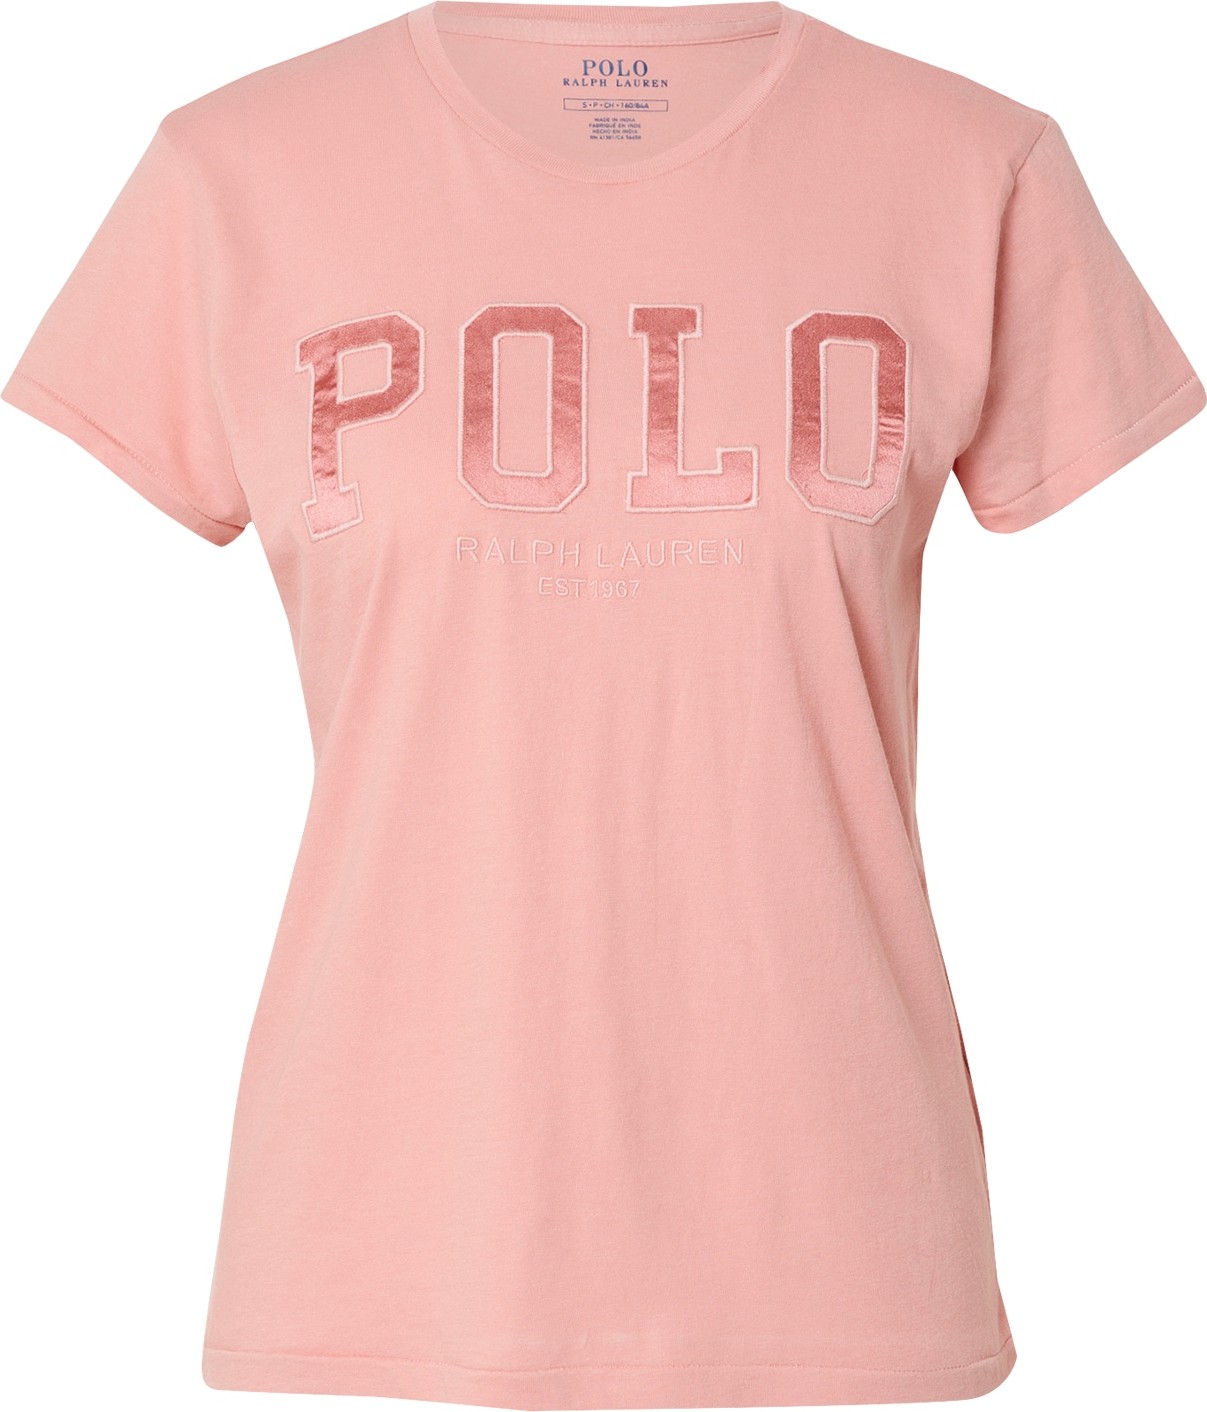 Polo Ralph Lauren Tričko světle růžová